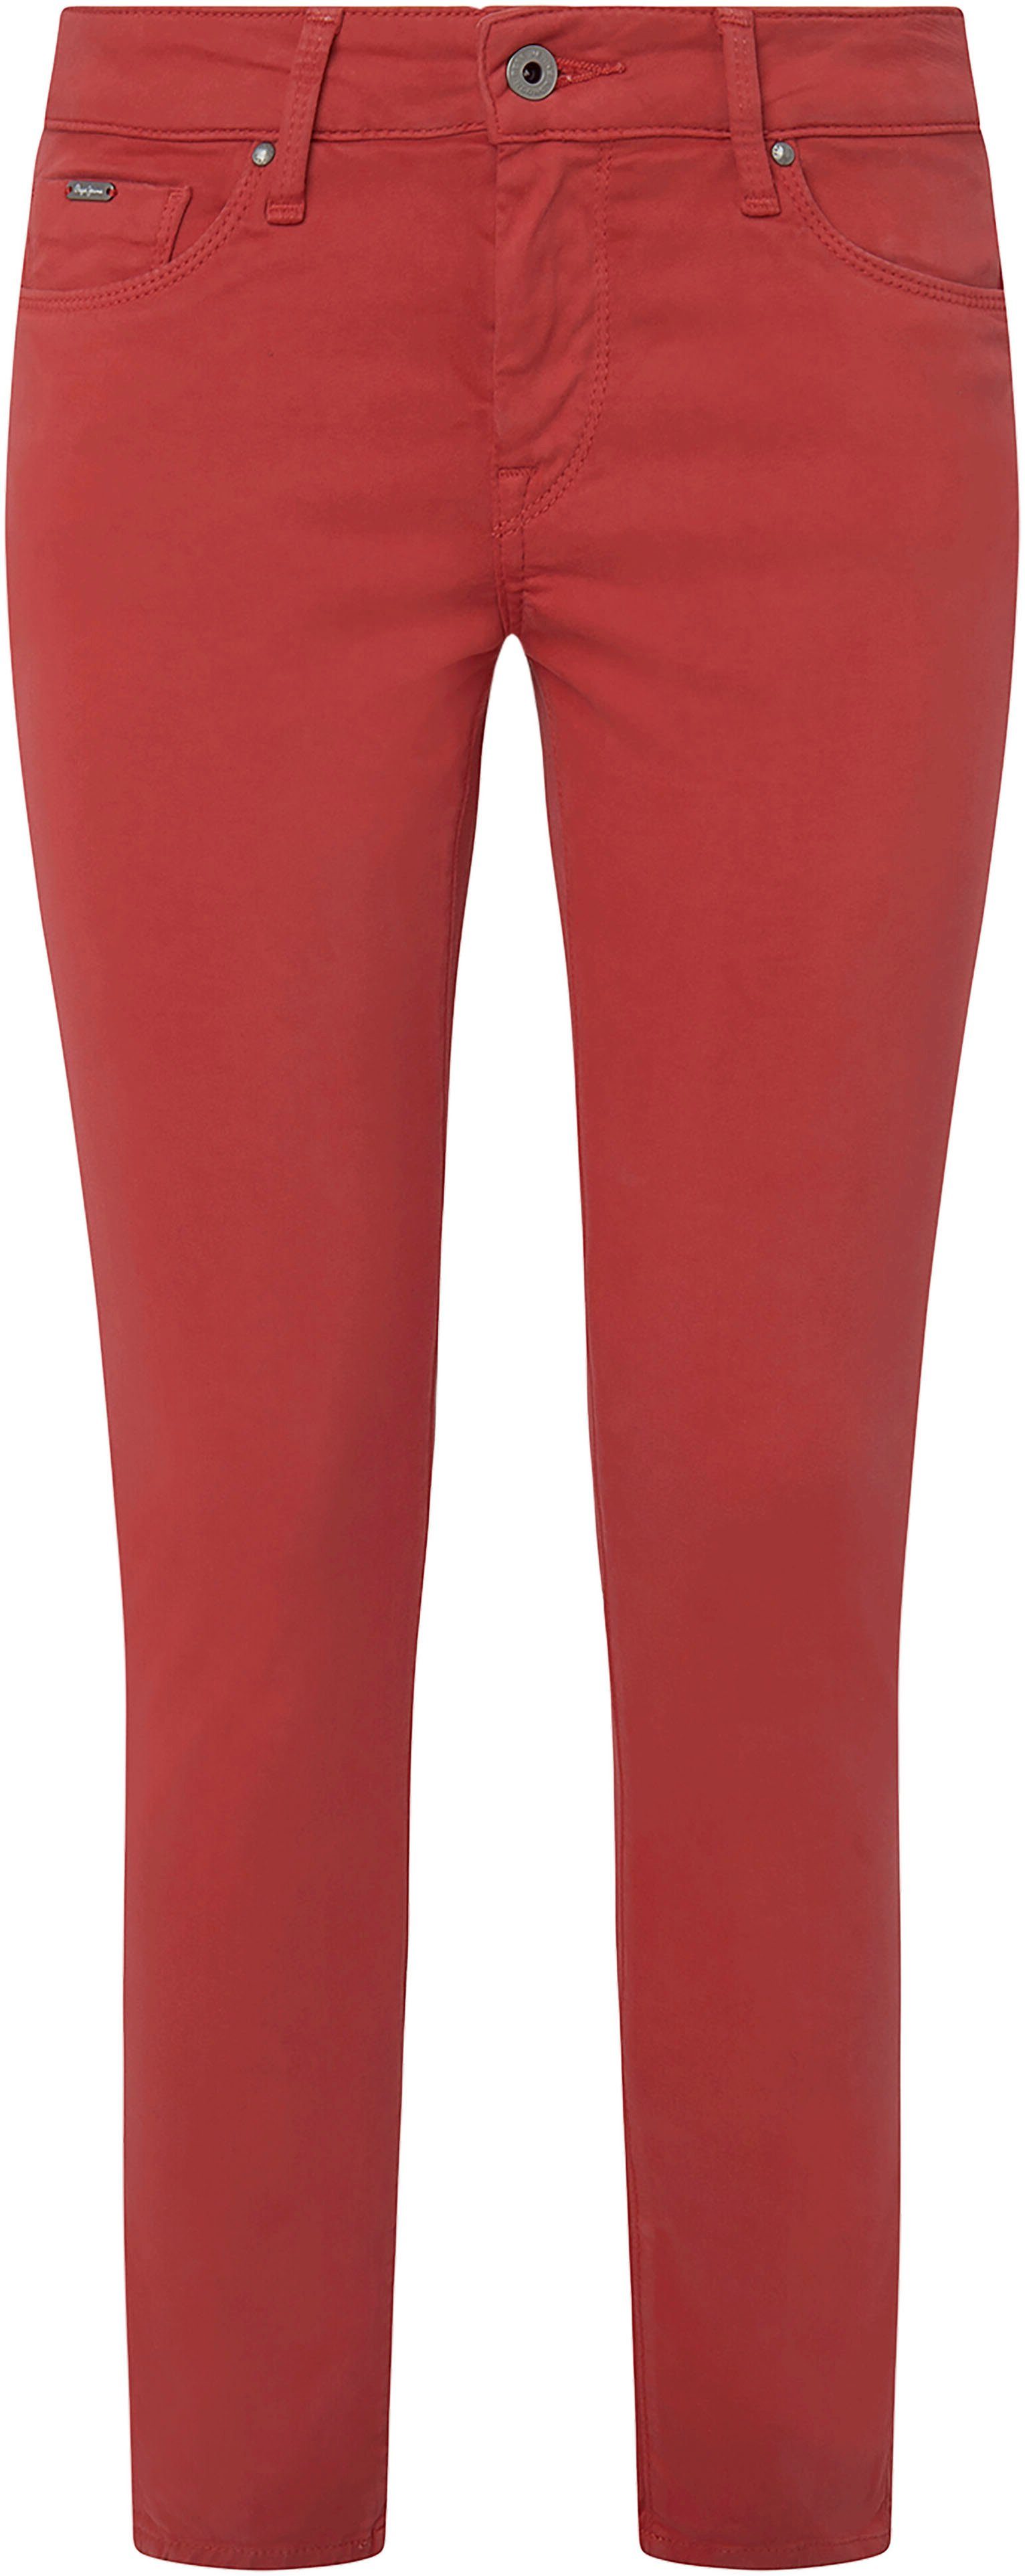 Pepe Jeans 5-Pocket-Hose red Skinny Soho studio